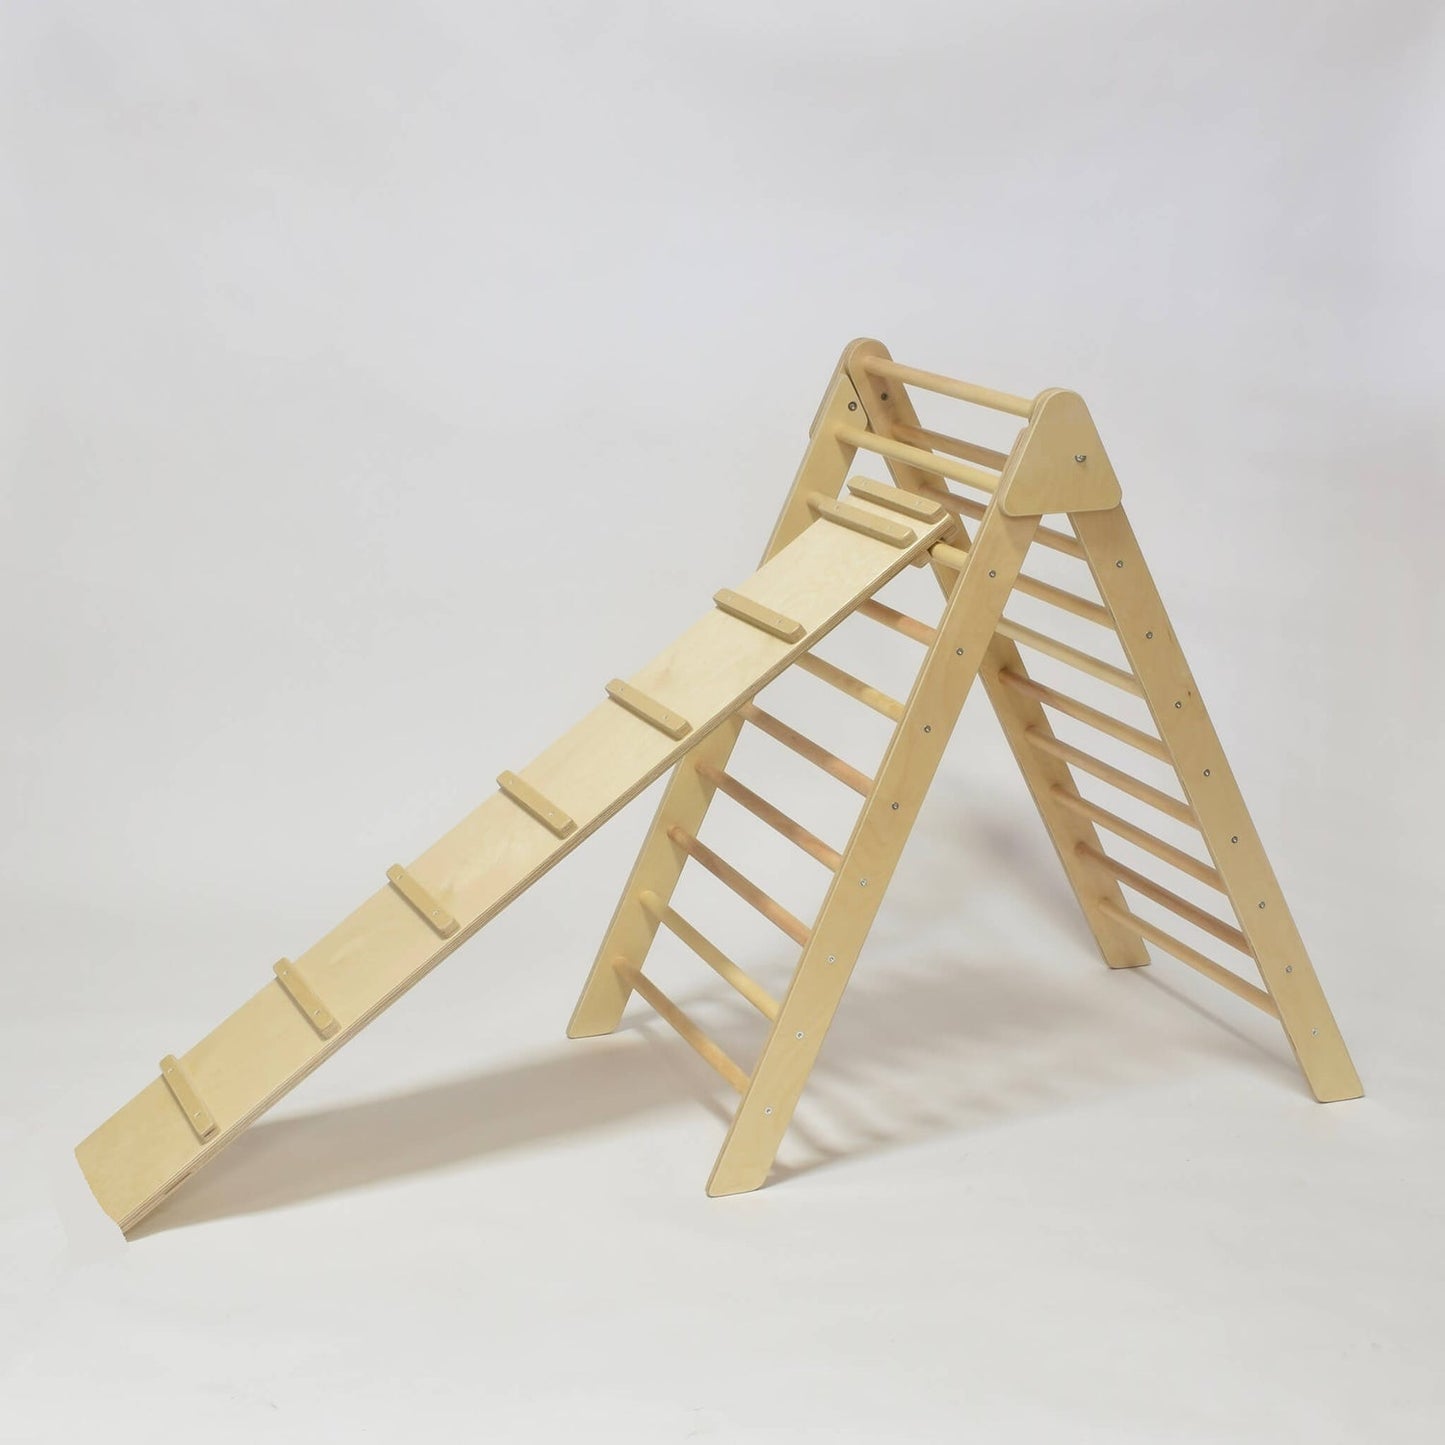 Olive- Pikler Triangle Ladder and Climber Slide - by Avenlur